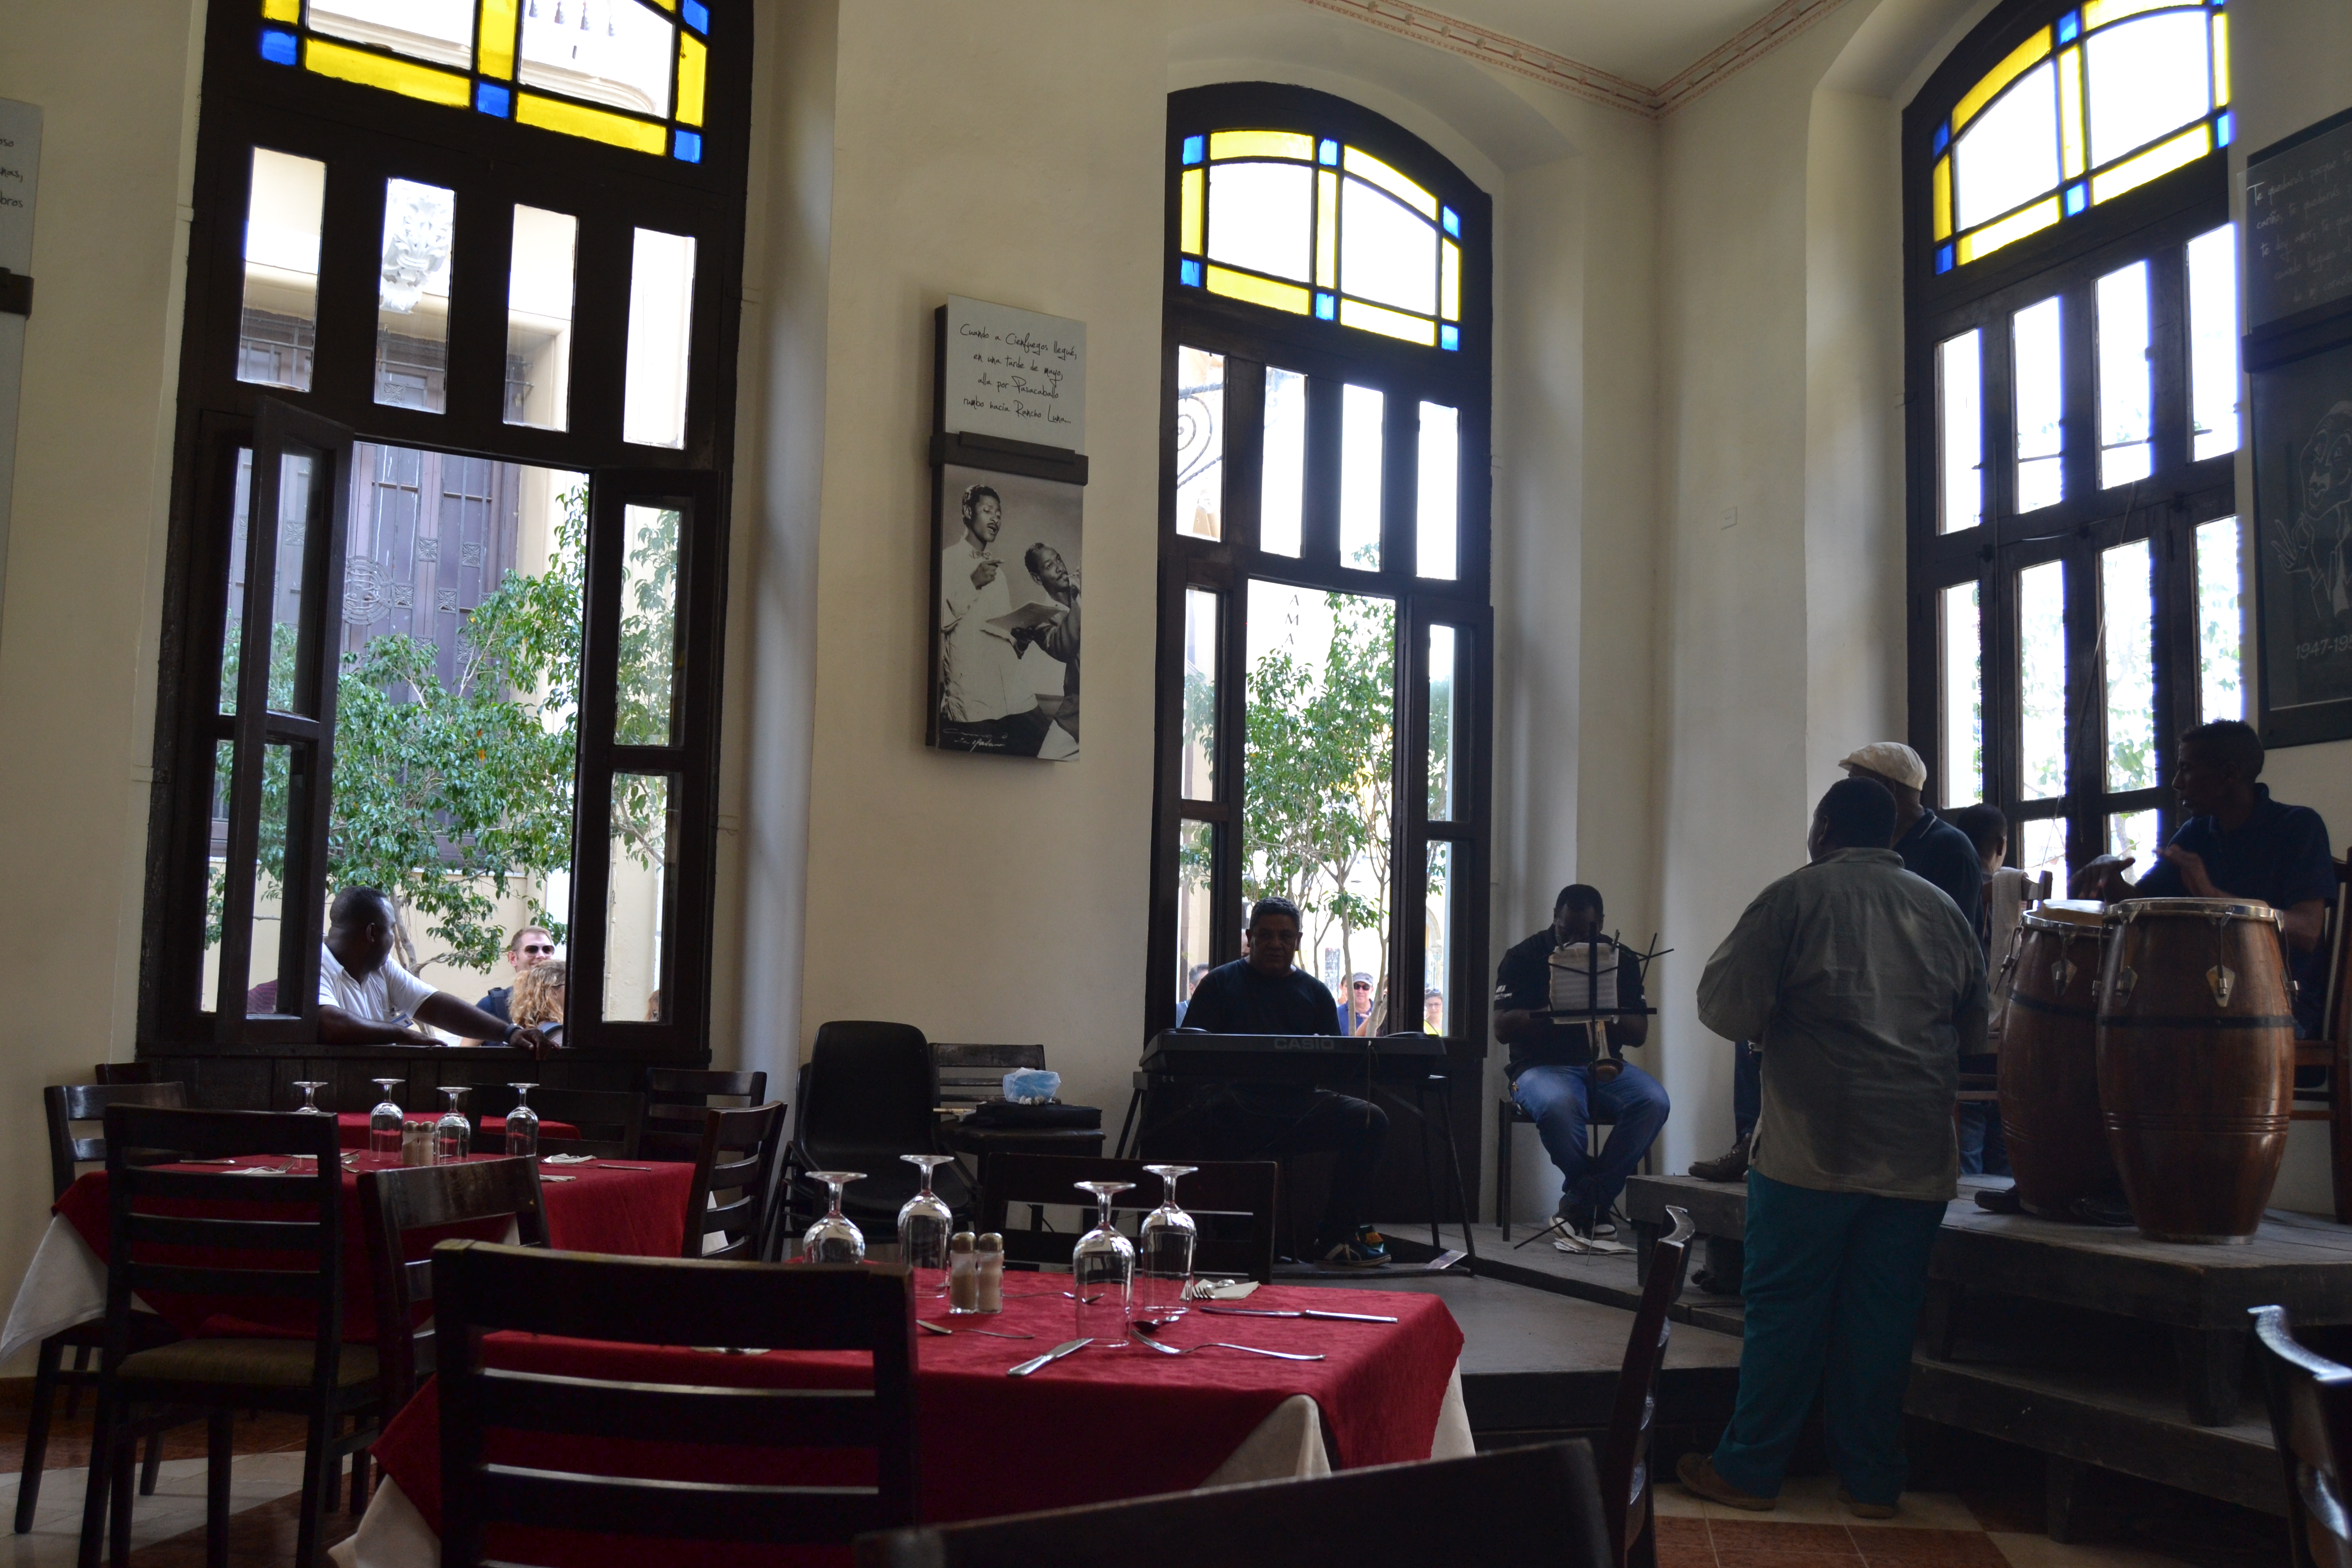 Cafe Taberna, La Habana, Cuba